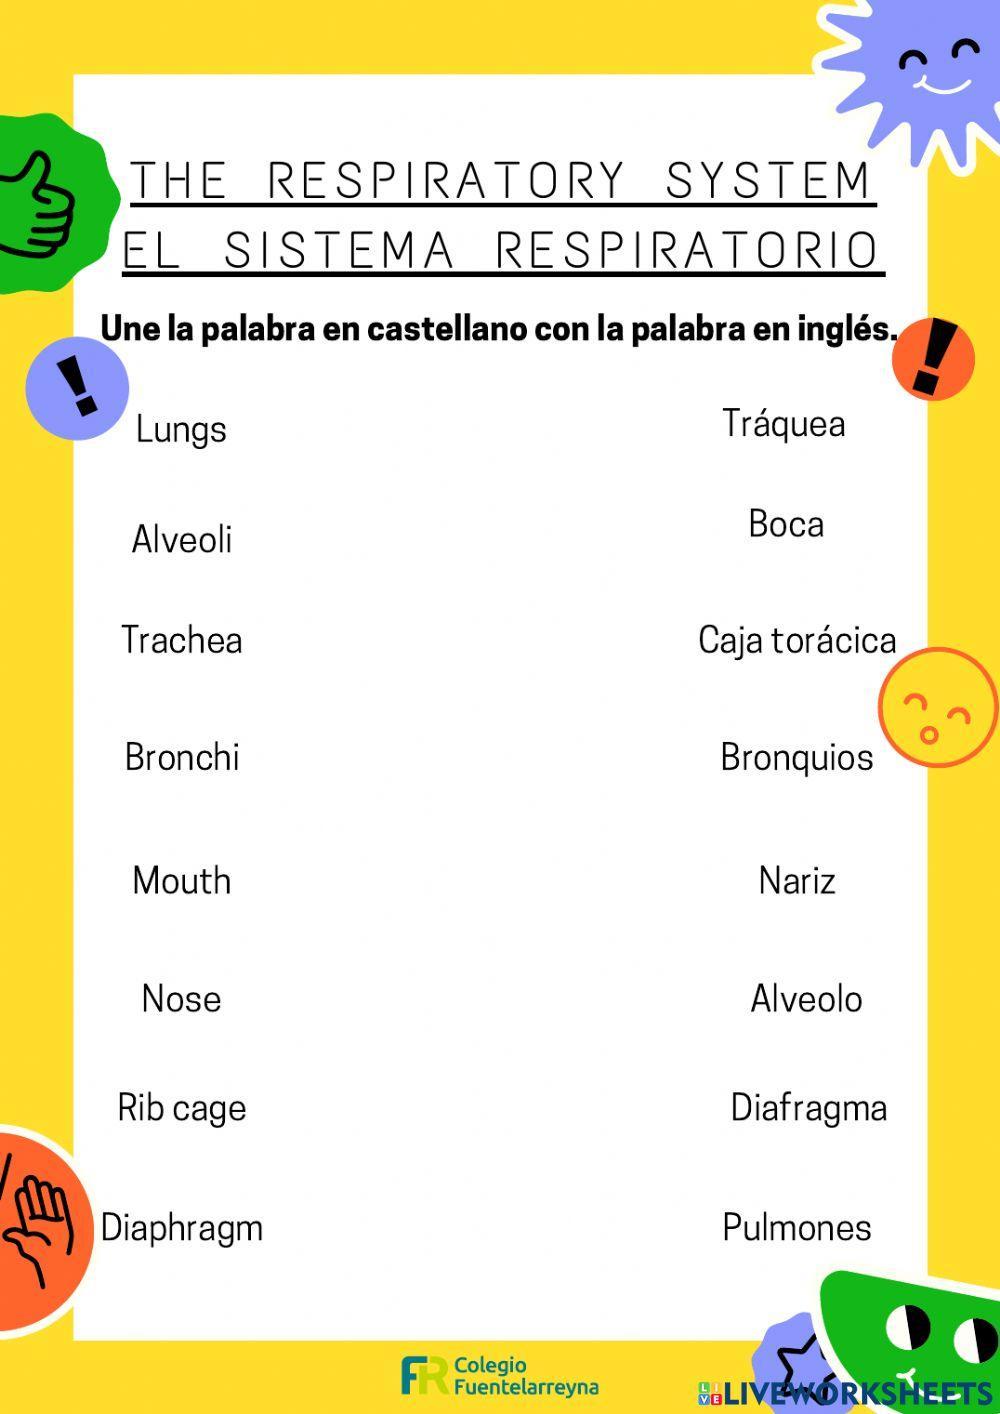 Respiratory sytem